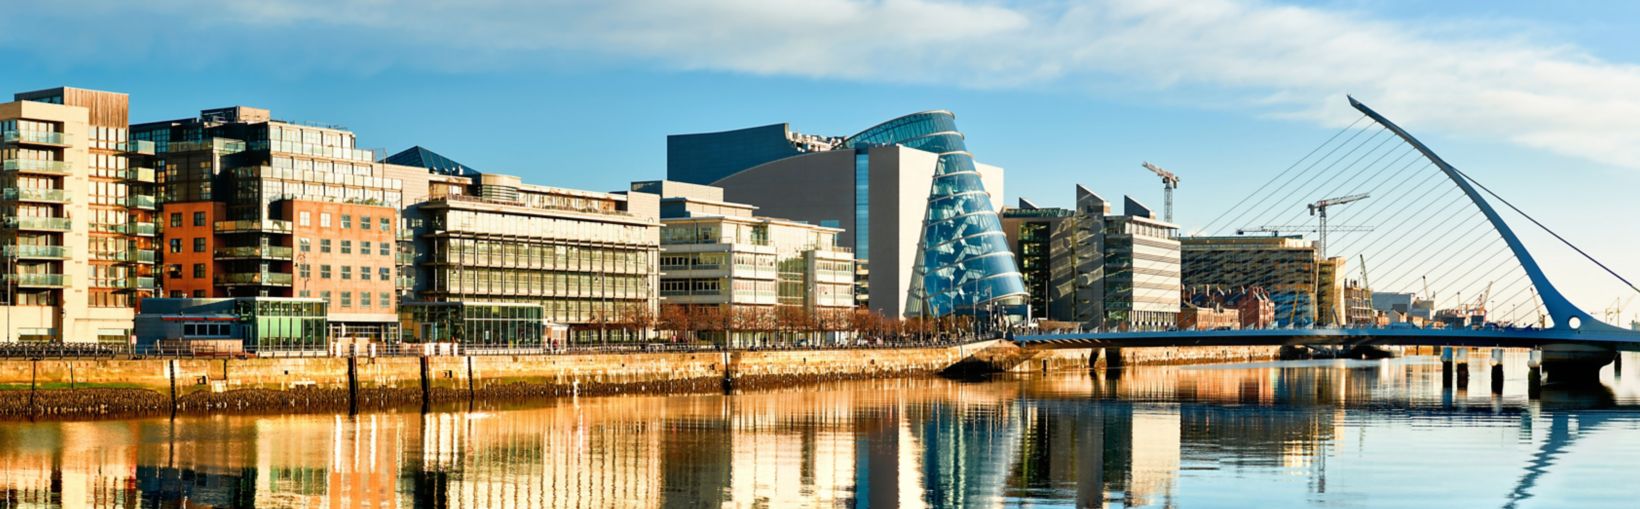 Moderne bygninger og kontorer på Liffey-floden i Dublin på en solrig dag med Harp-broen til højre